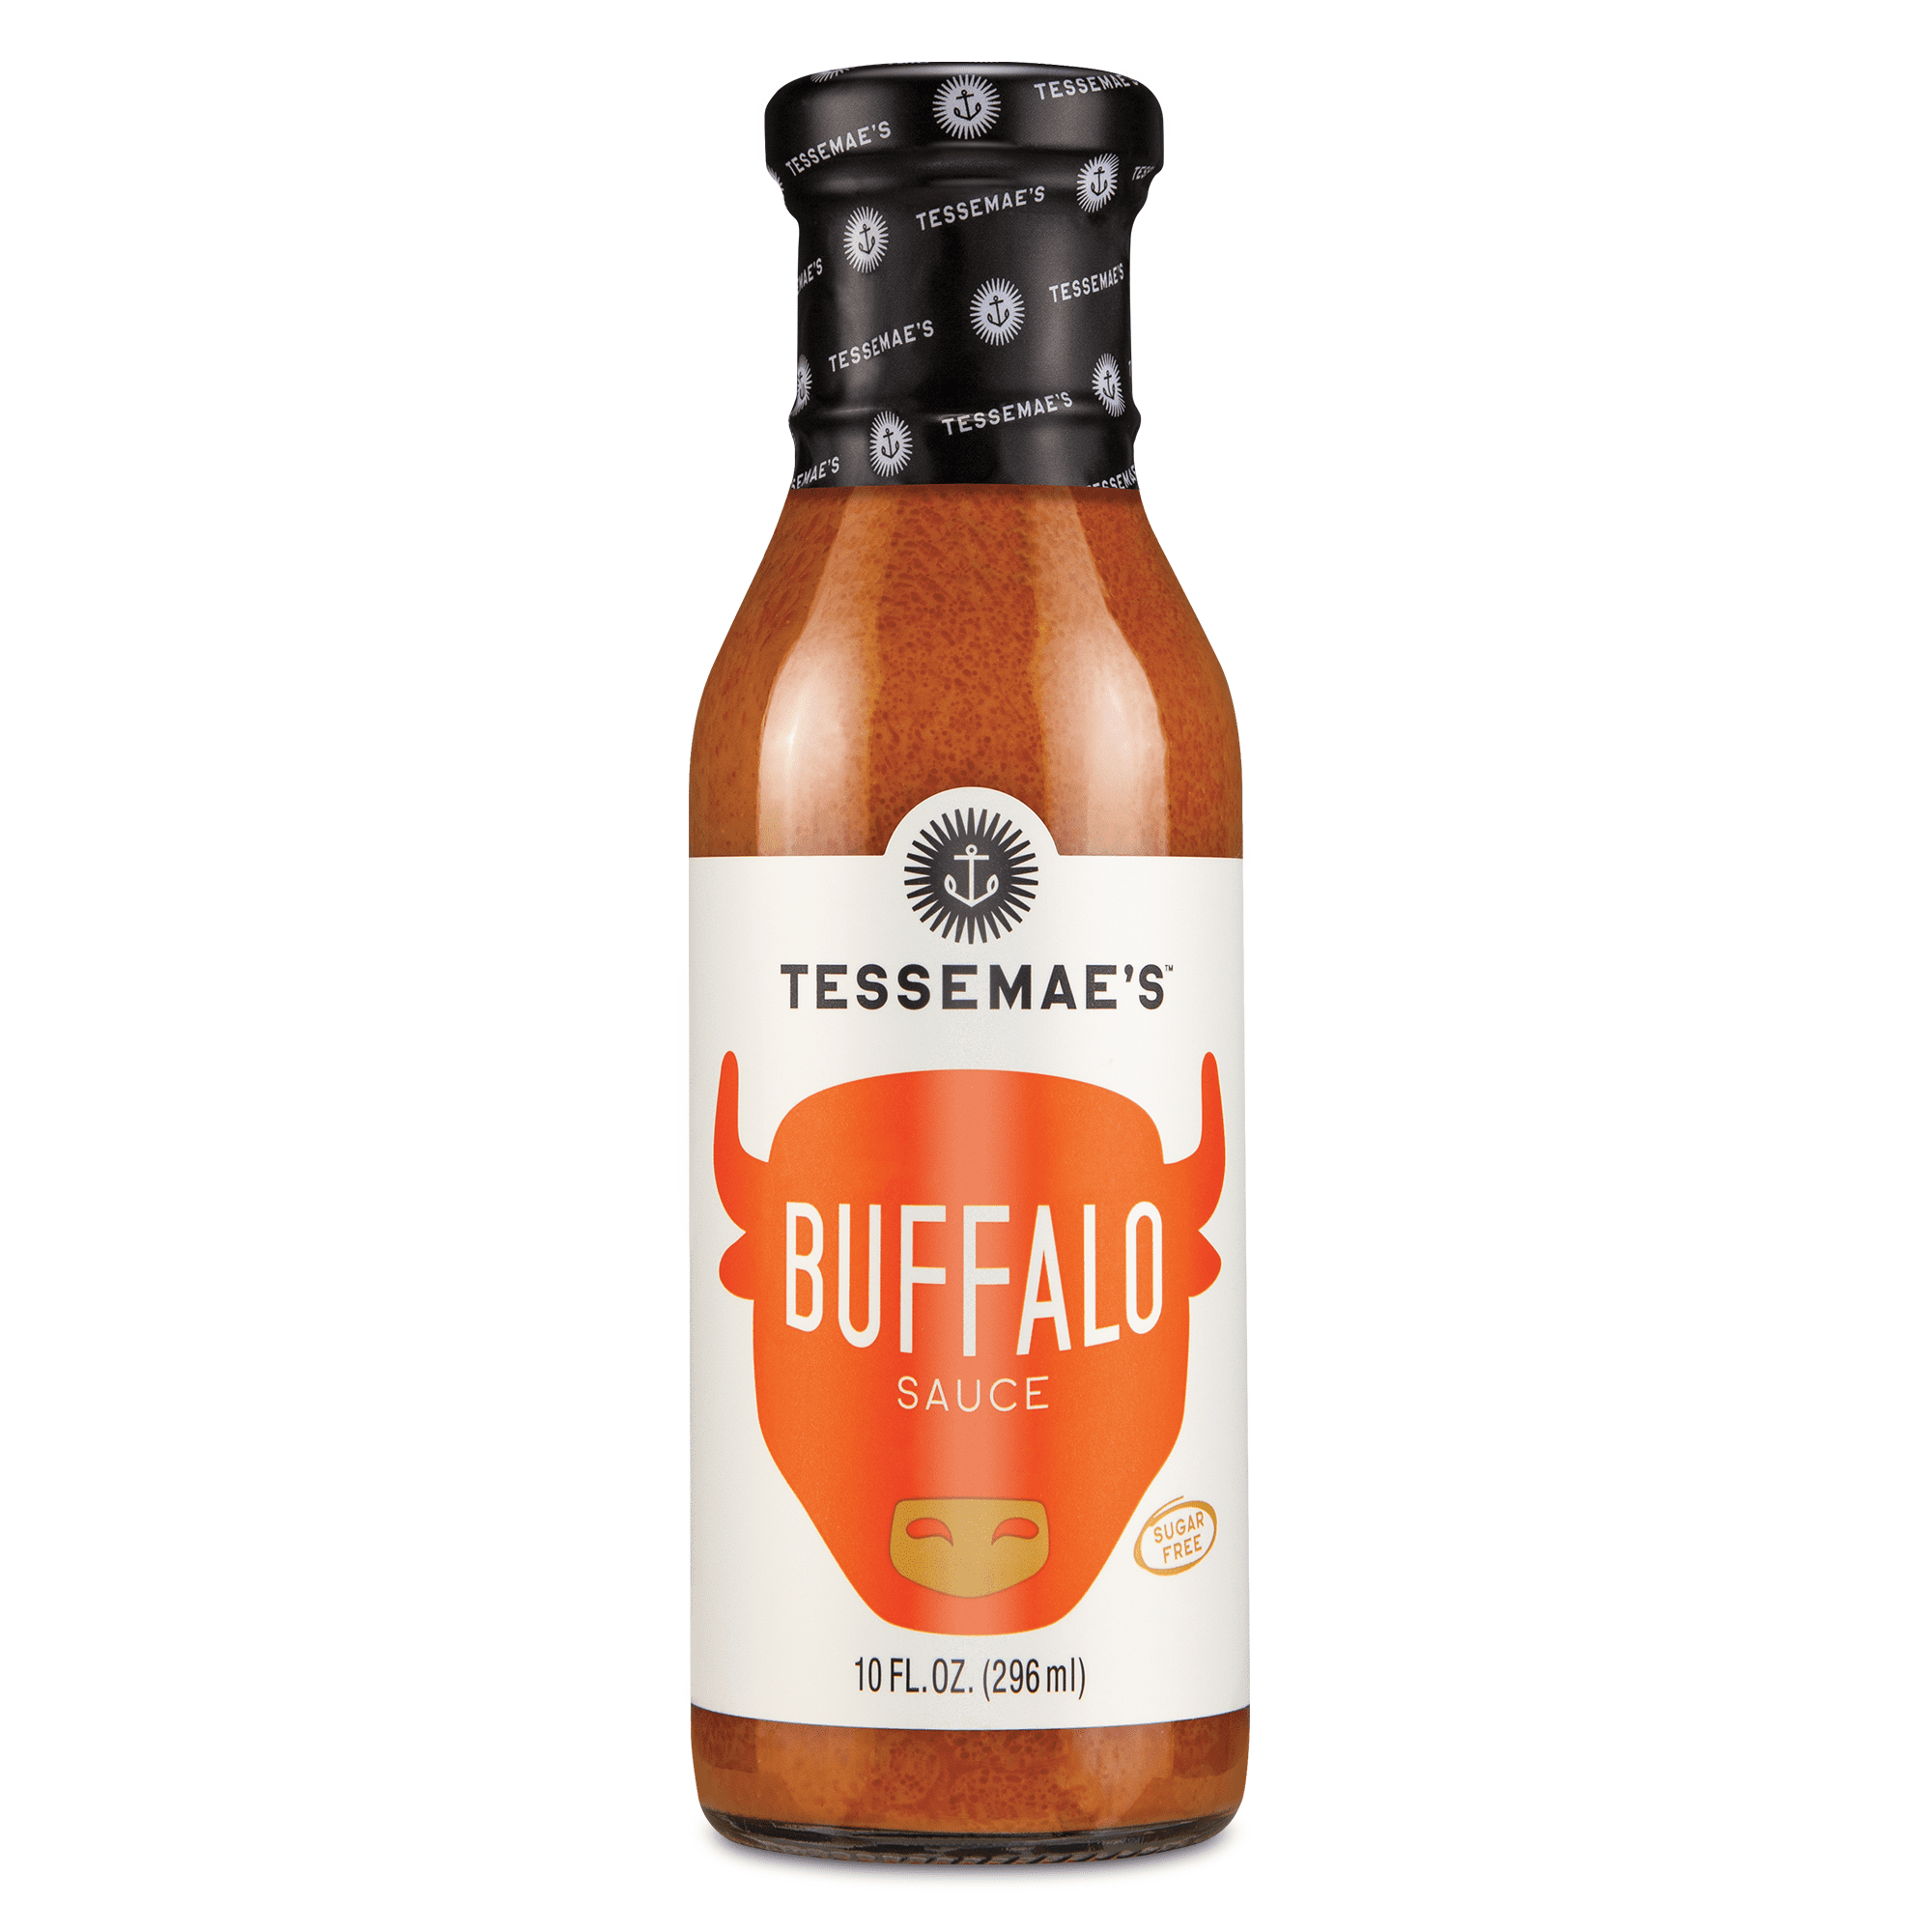 Tessemae's Buffalo Sauce 6 units per case 10.0 oz